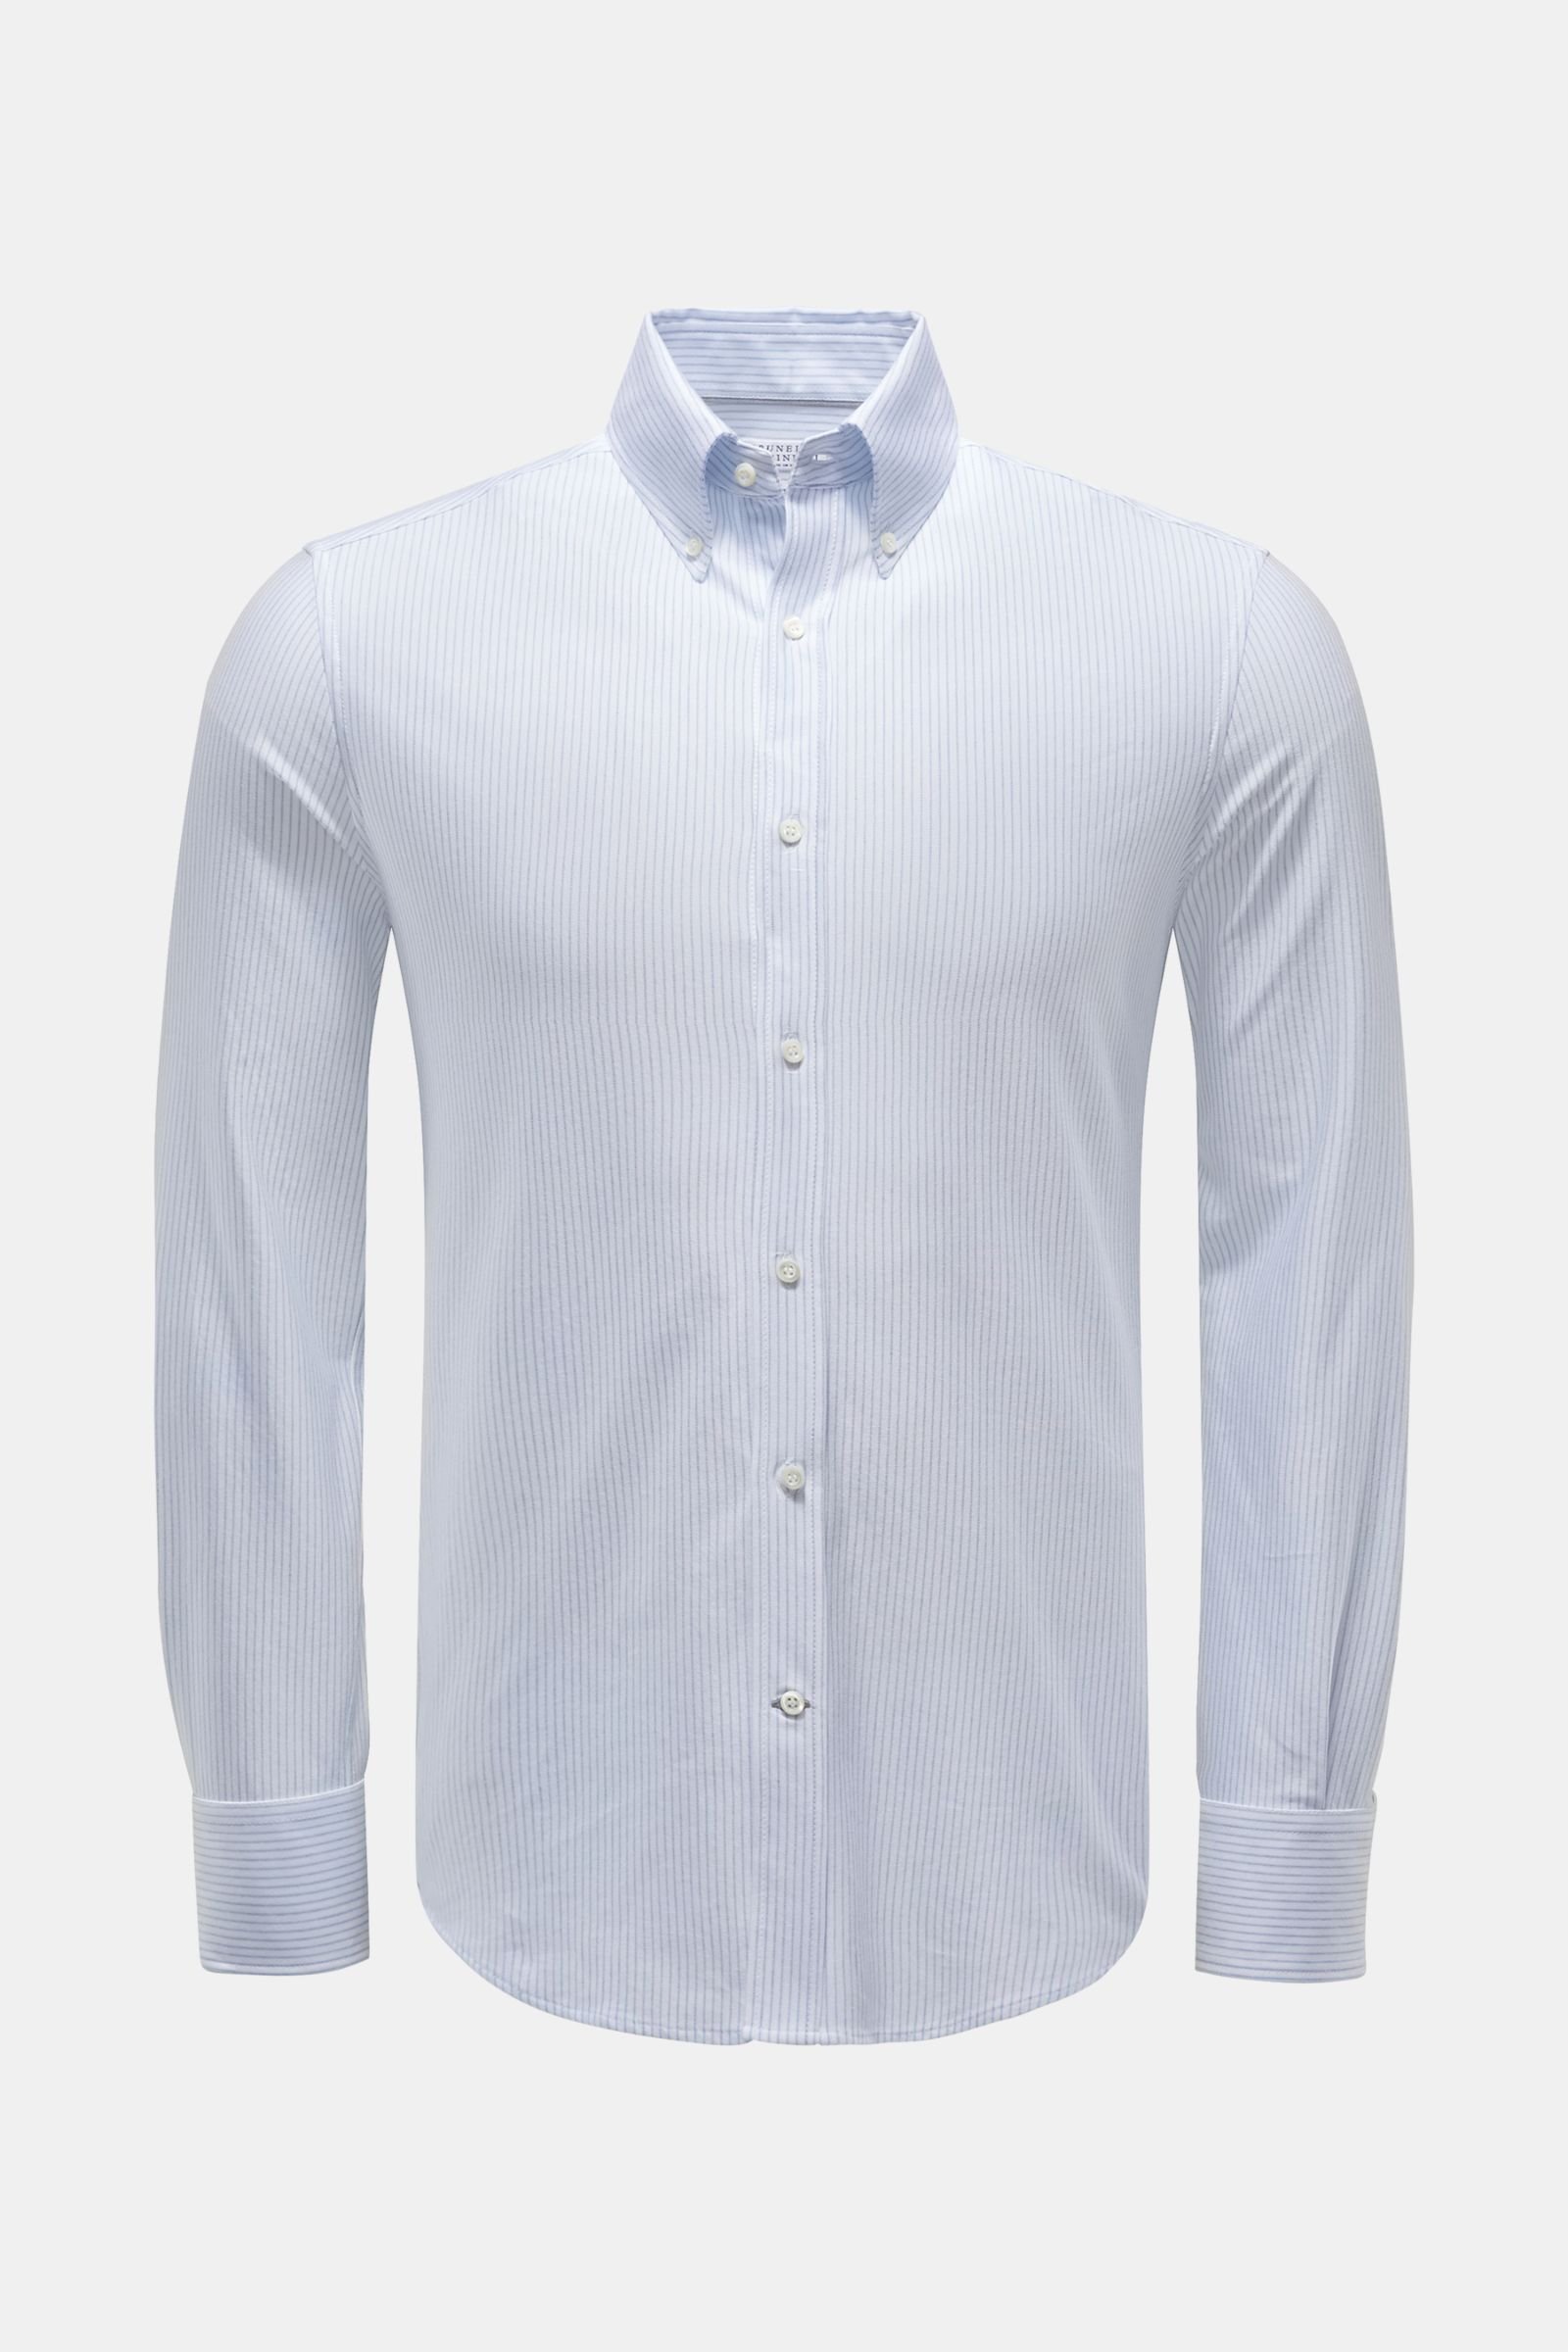 Jersey shirt button-down collar white/blue striped